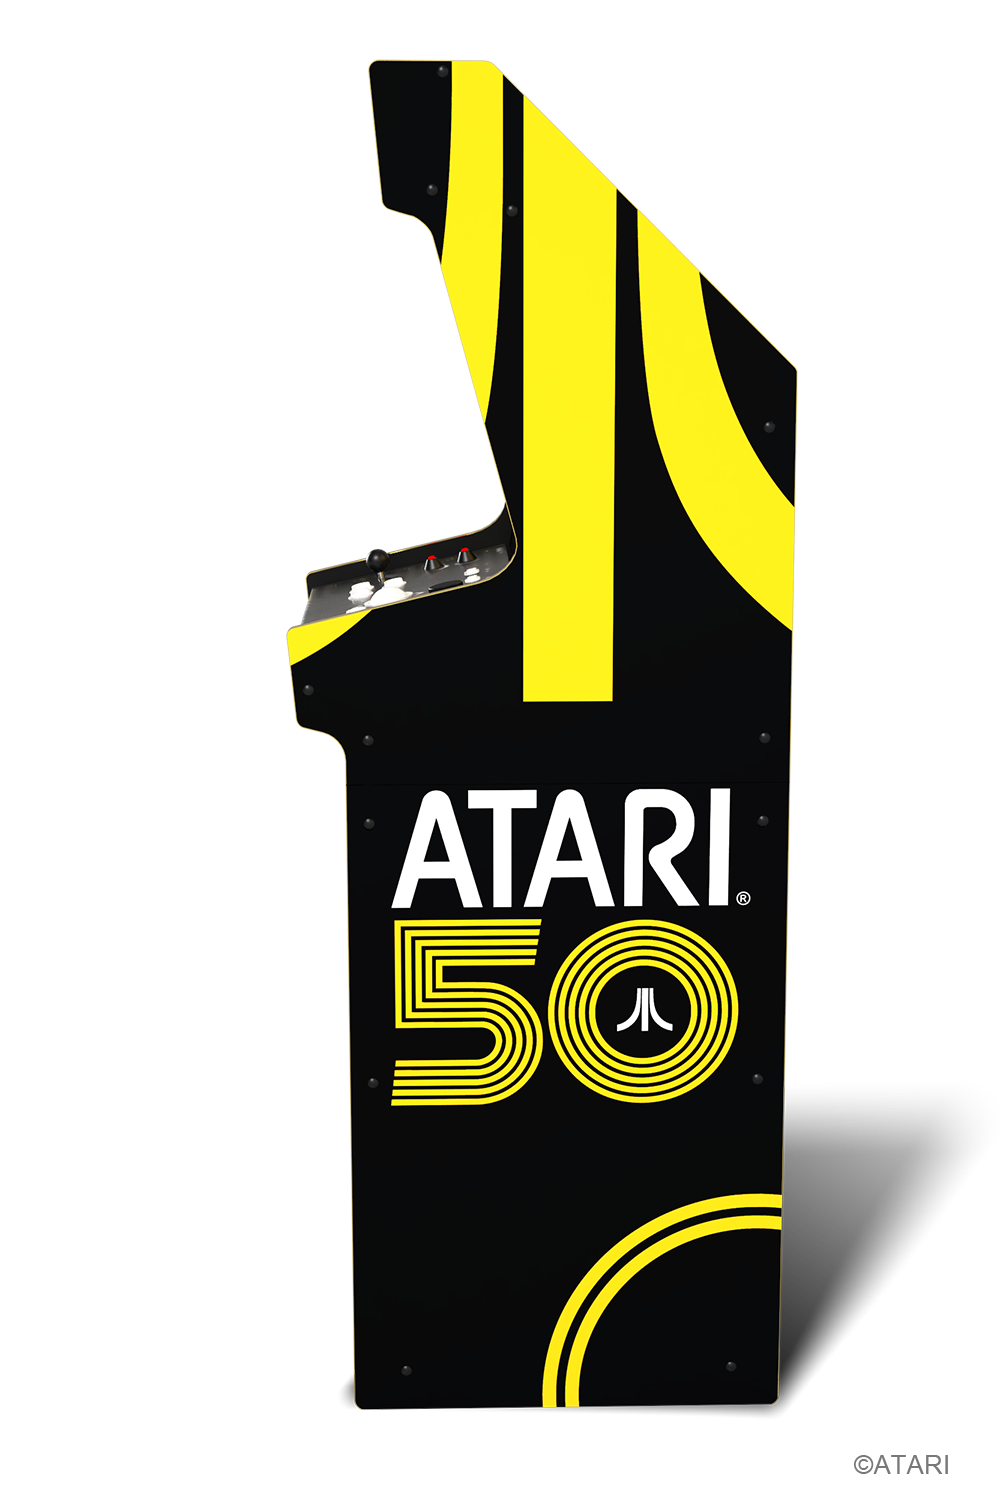 Atari 50th Anniversary Deluxe